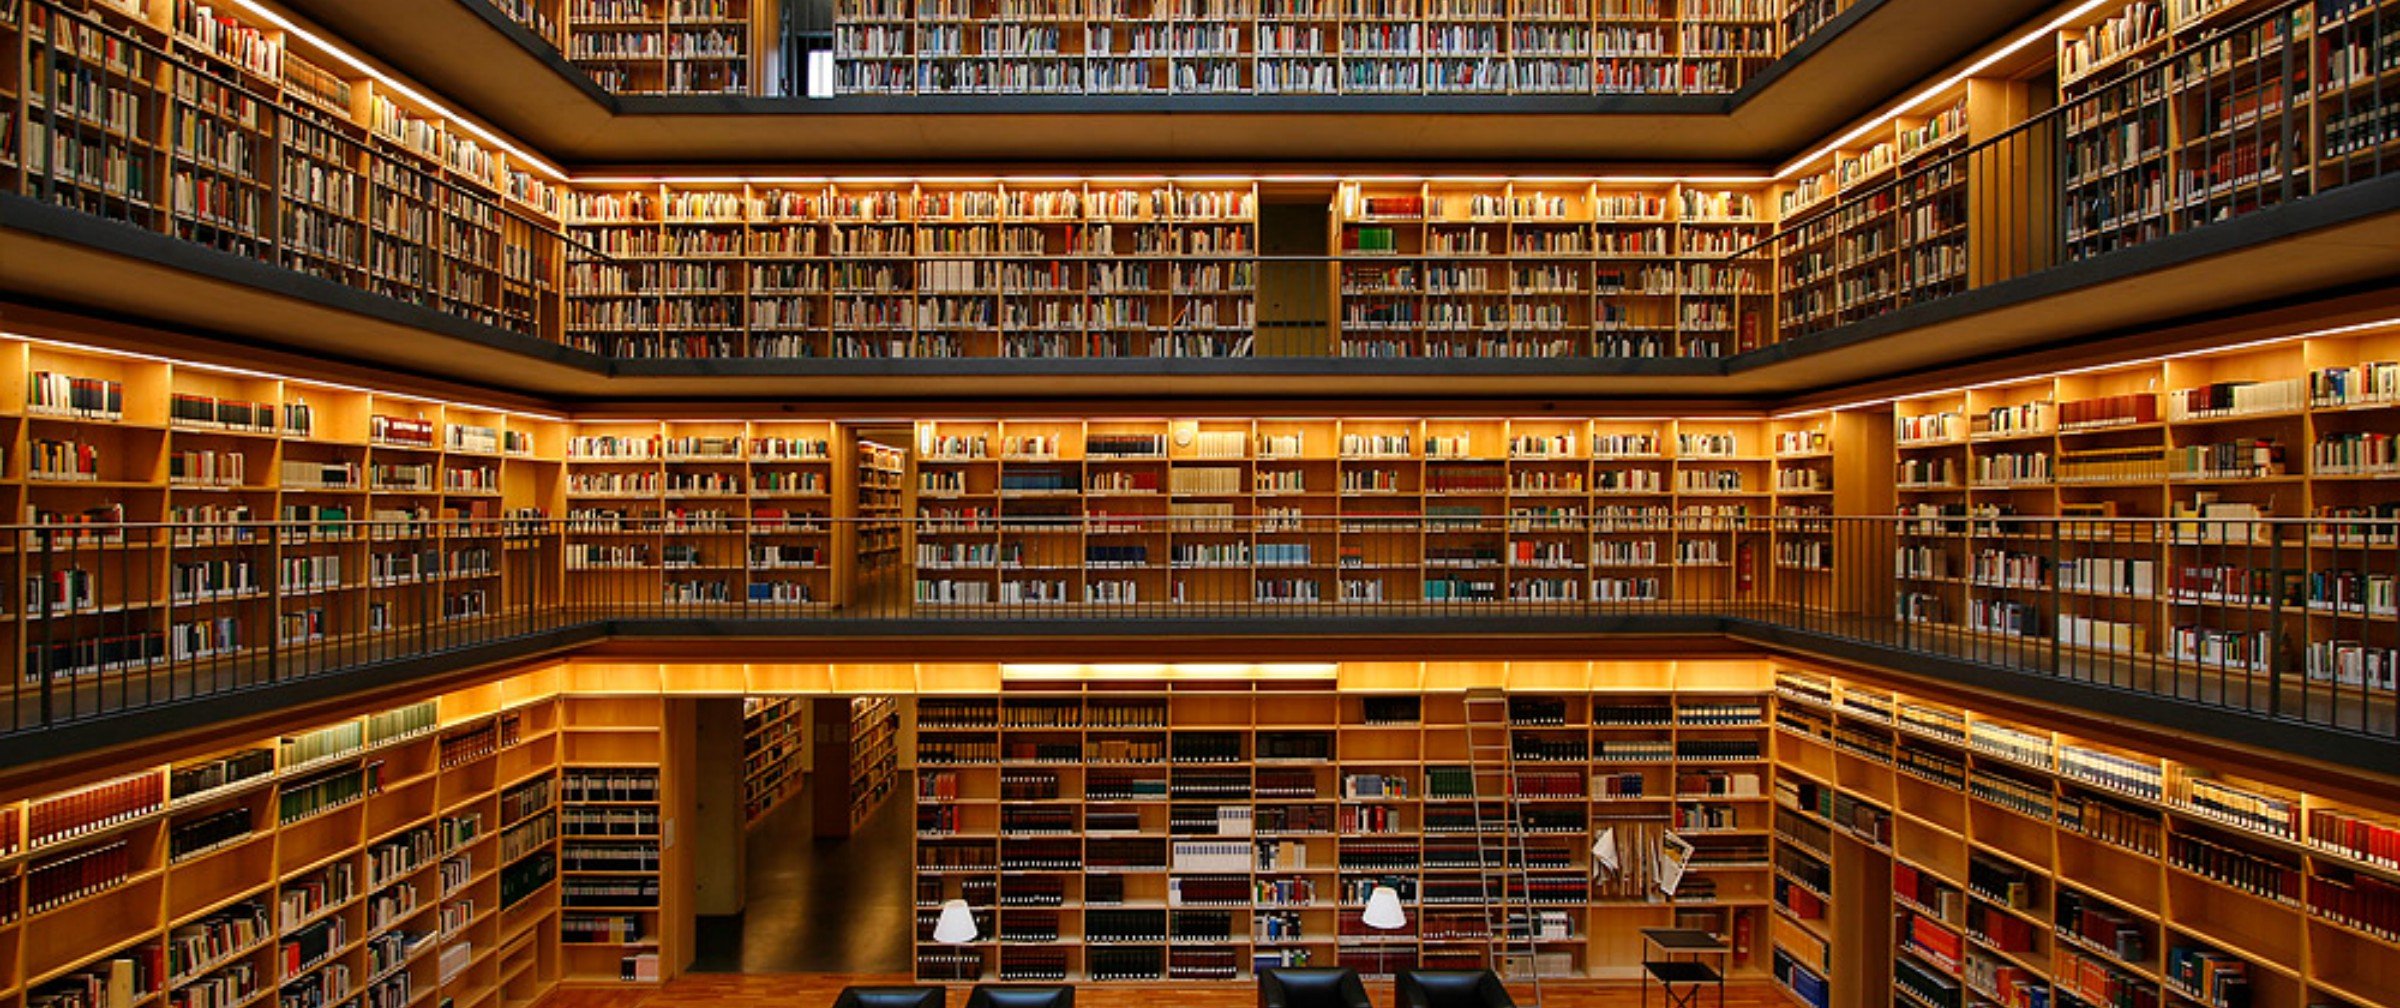 Библиотеки музыка 5. 19-Ярусное книгохранилище РГБ. Библиотека Phillips Exeter. Красивая библиотека. Большая библиотека.